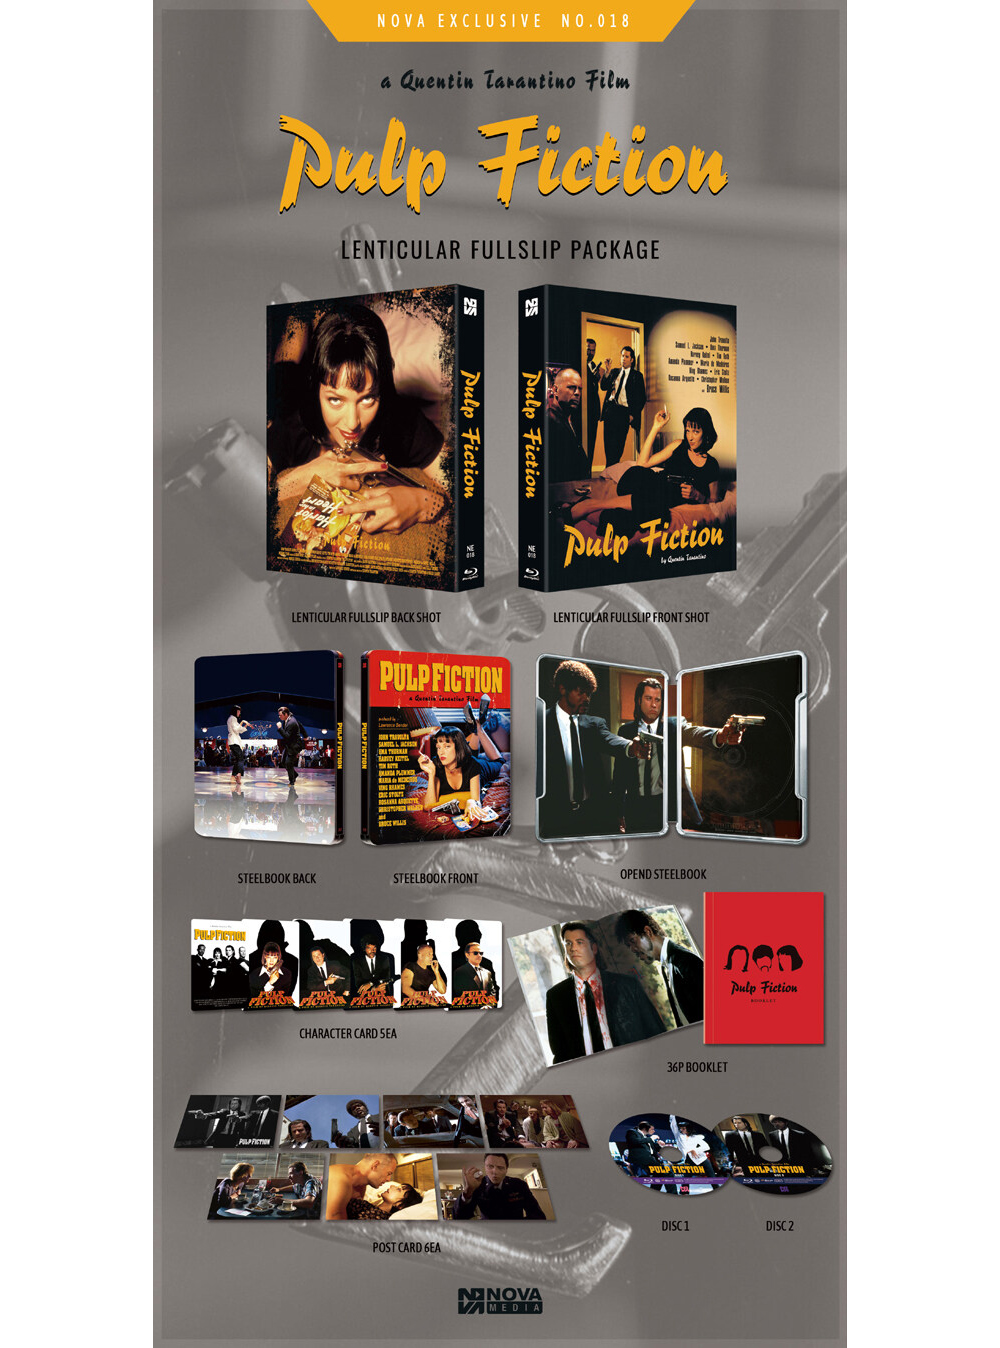 USED] Pulp Fiction BLU-RAY Steelbook Limited Edition - Lenticular / NOVA -  YUKIPALO